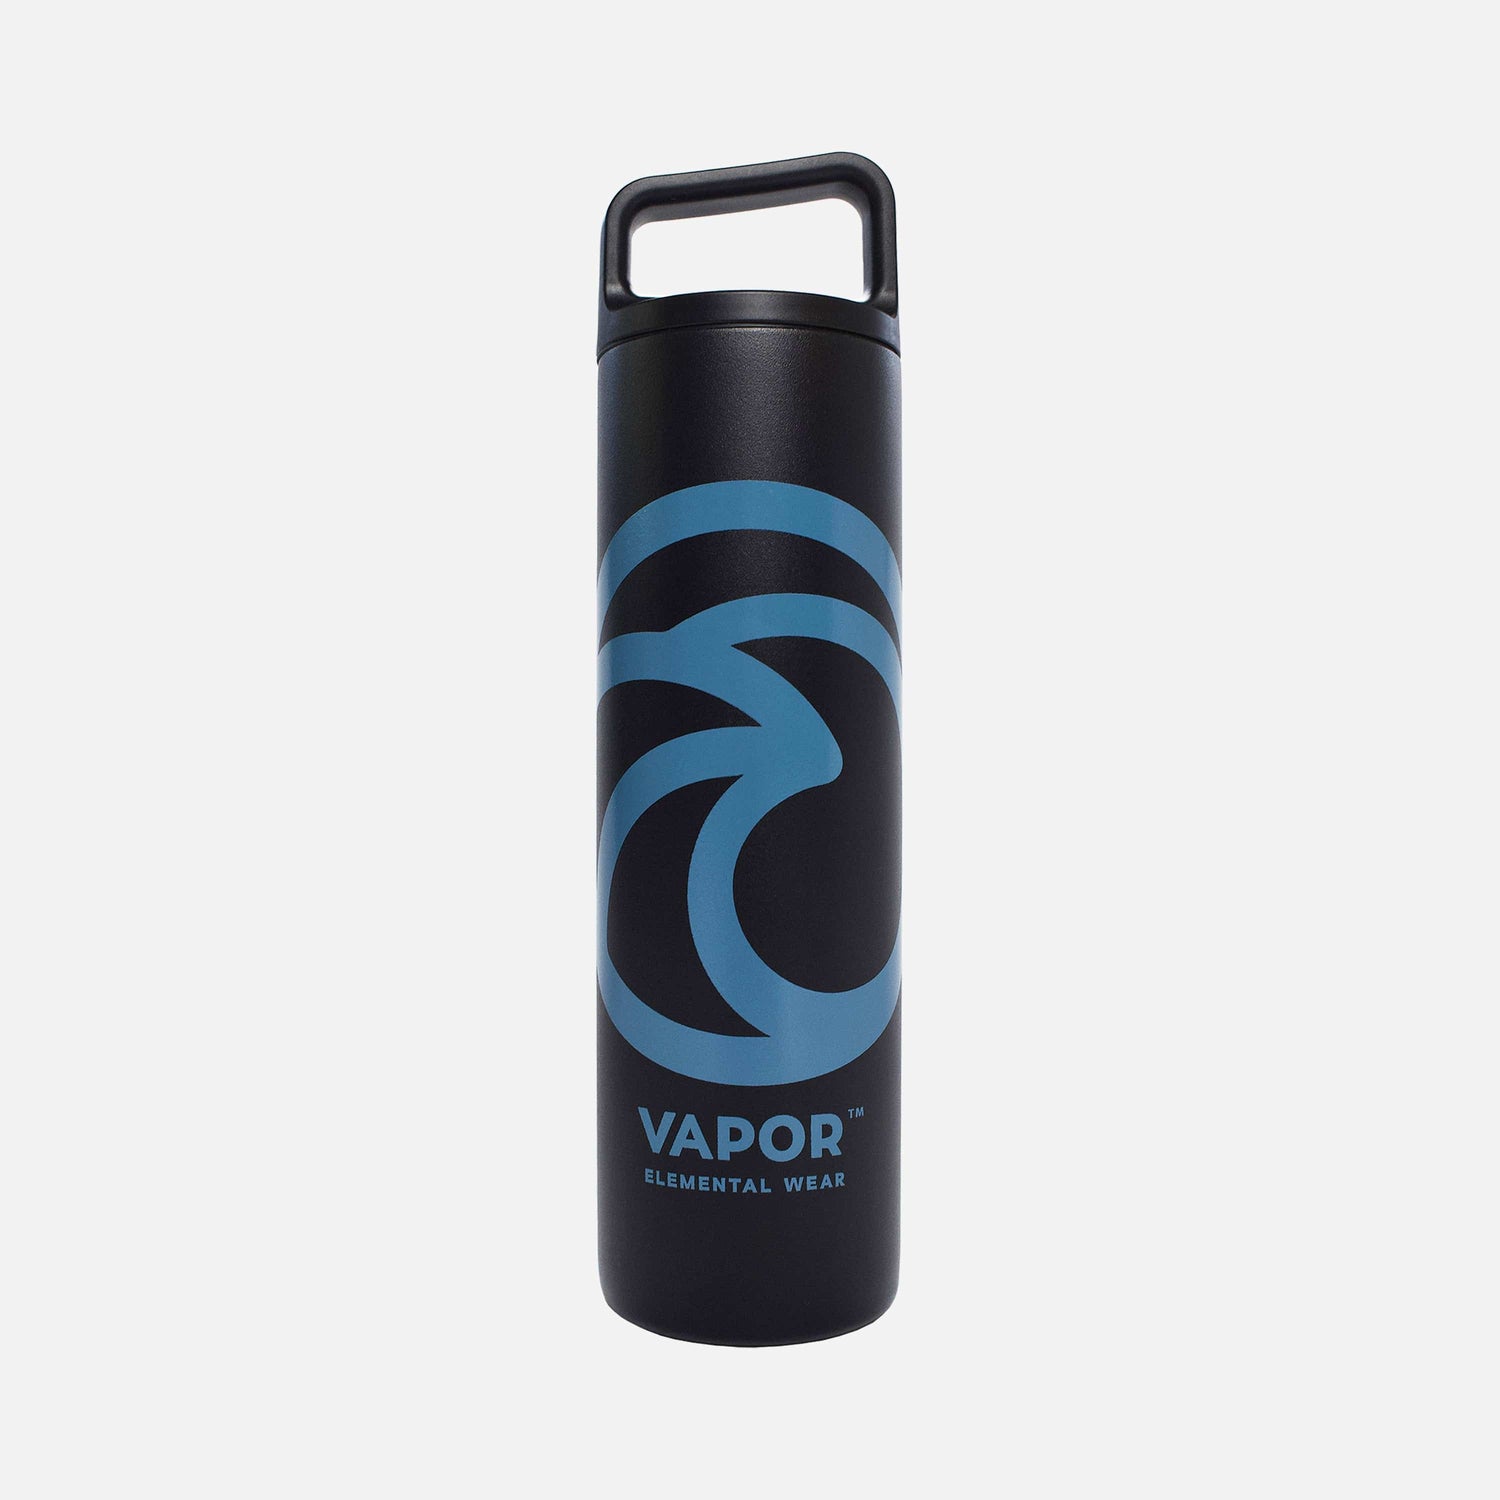 Vapor Apparel Sun Protection 20 oz Vapor Elemental Wear Insulated Water Bottle by MiiR